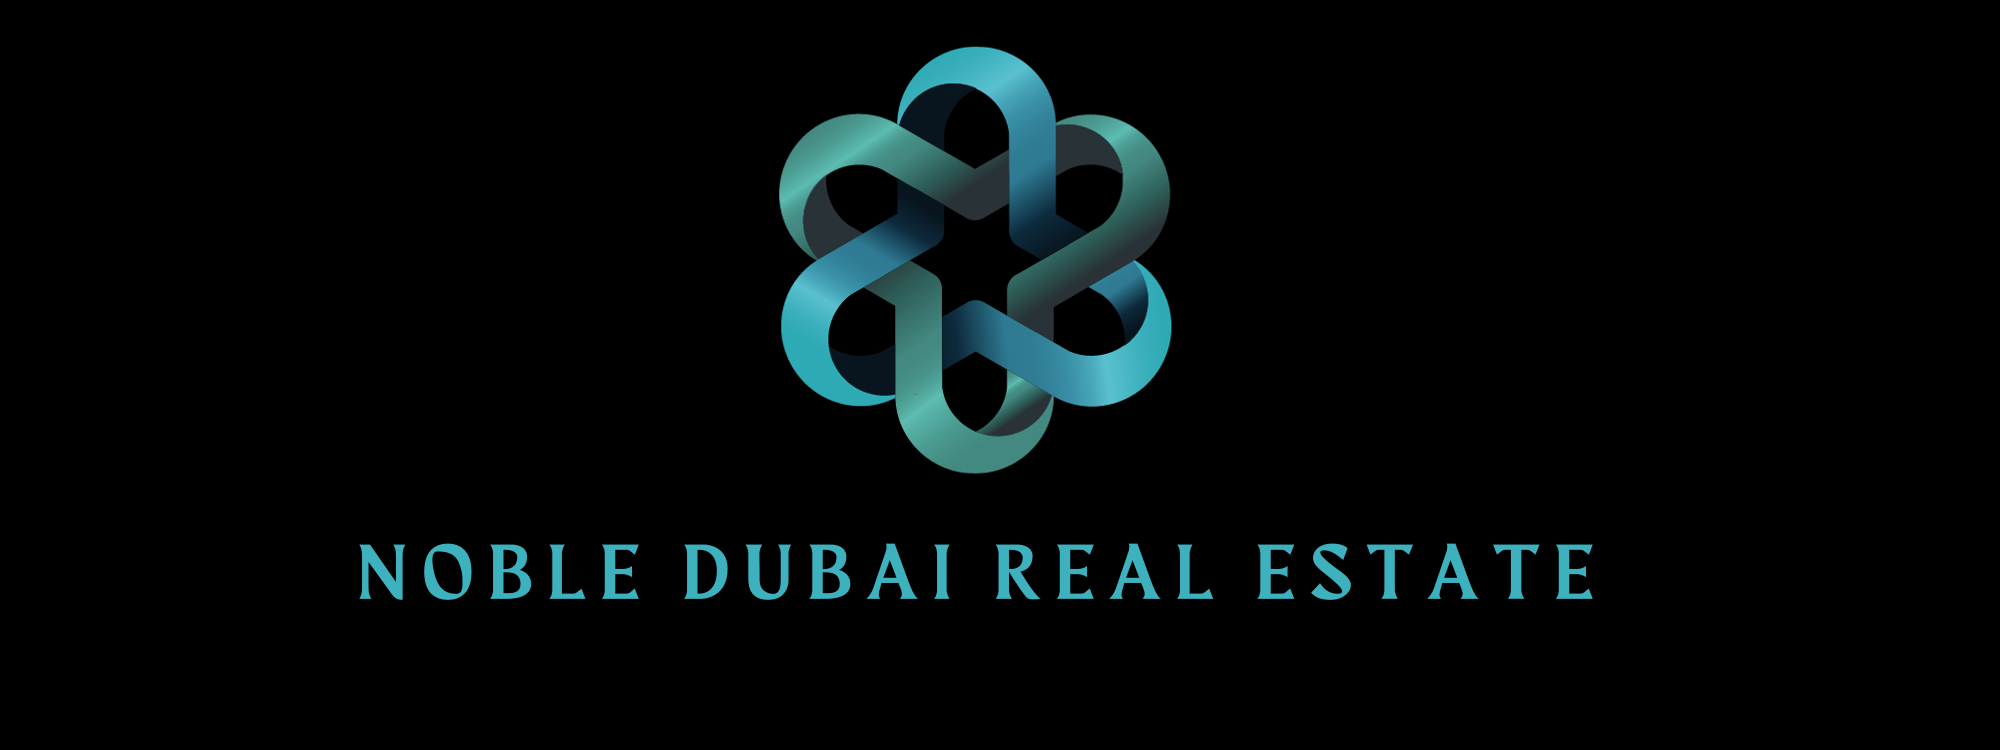 NOBLE DUBAI real estate